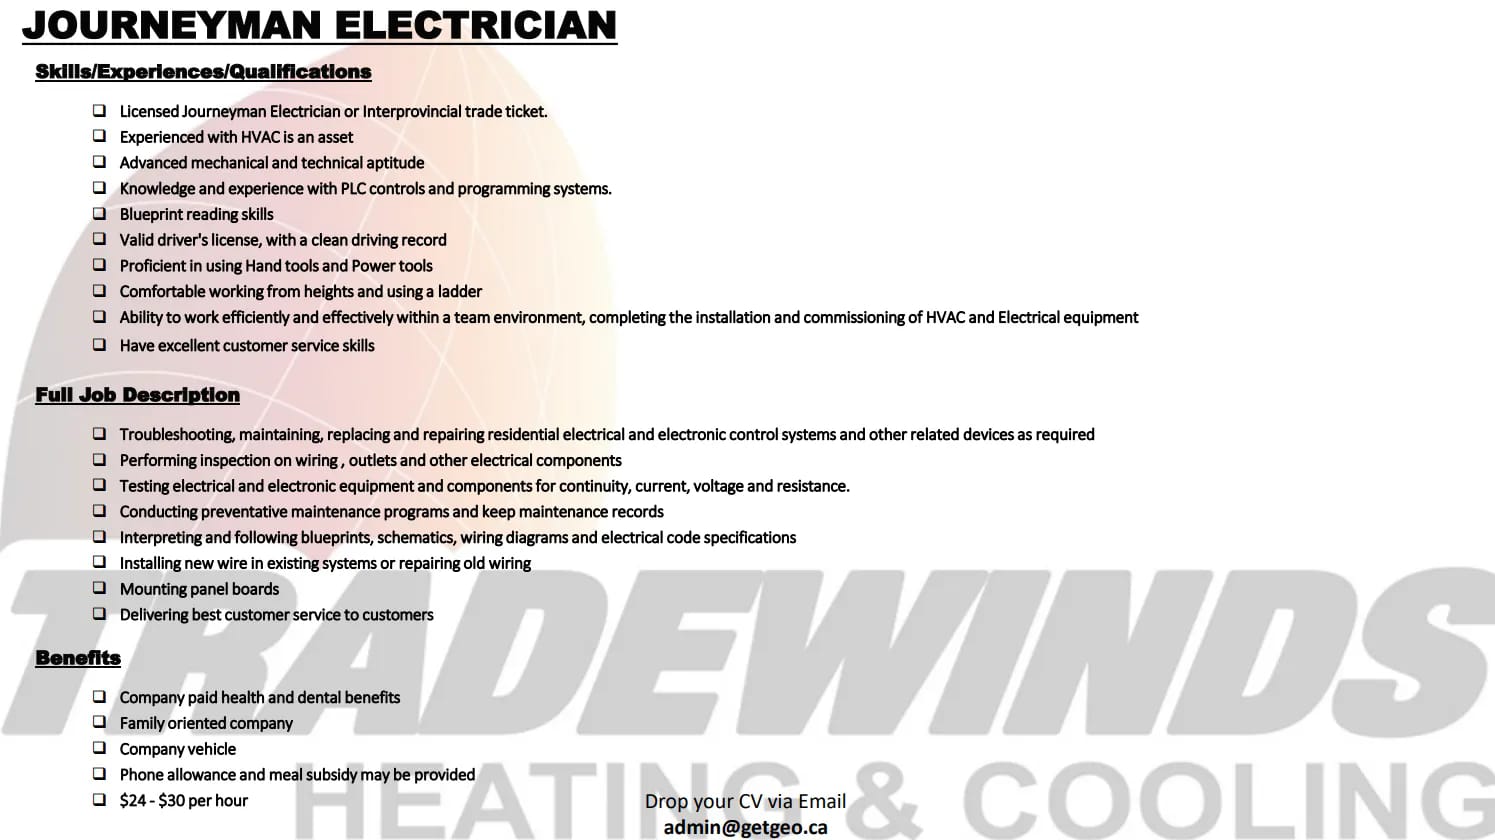 Tradewinds Eco Energy Solutions 376 Macewen Rd, Summerside Prince Edward Island C1N 4X9